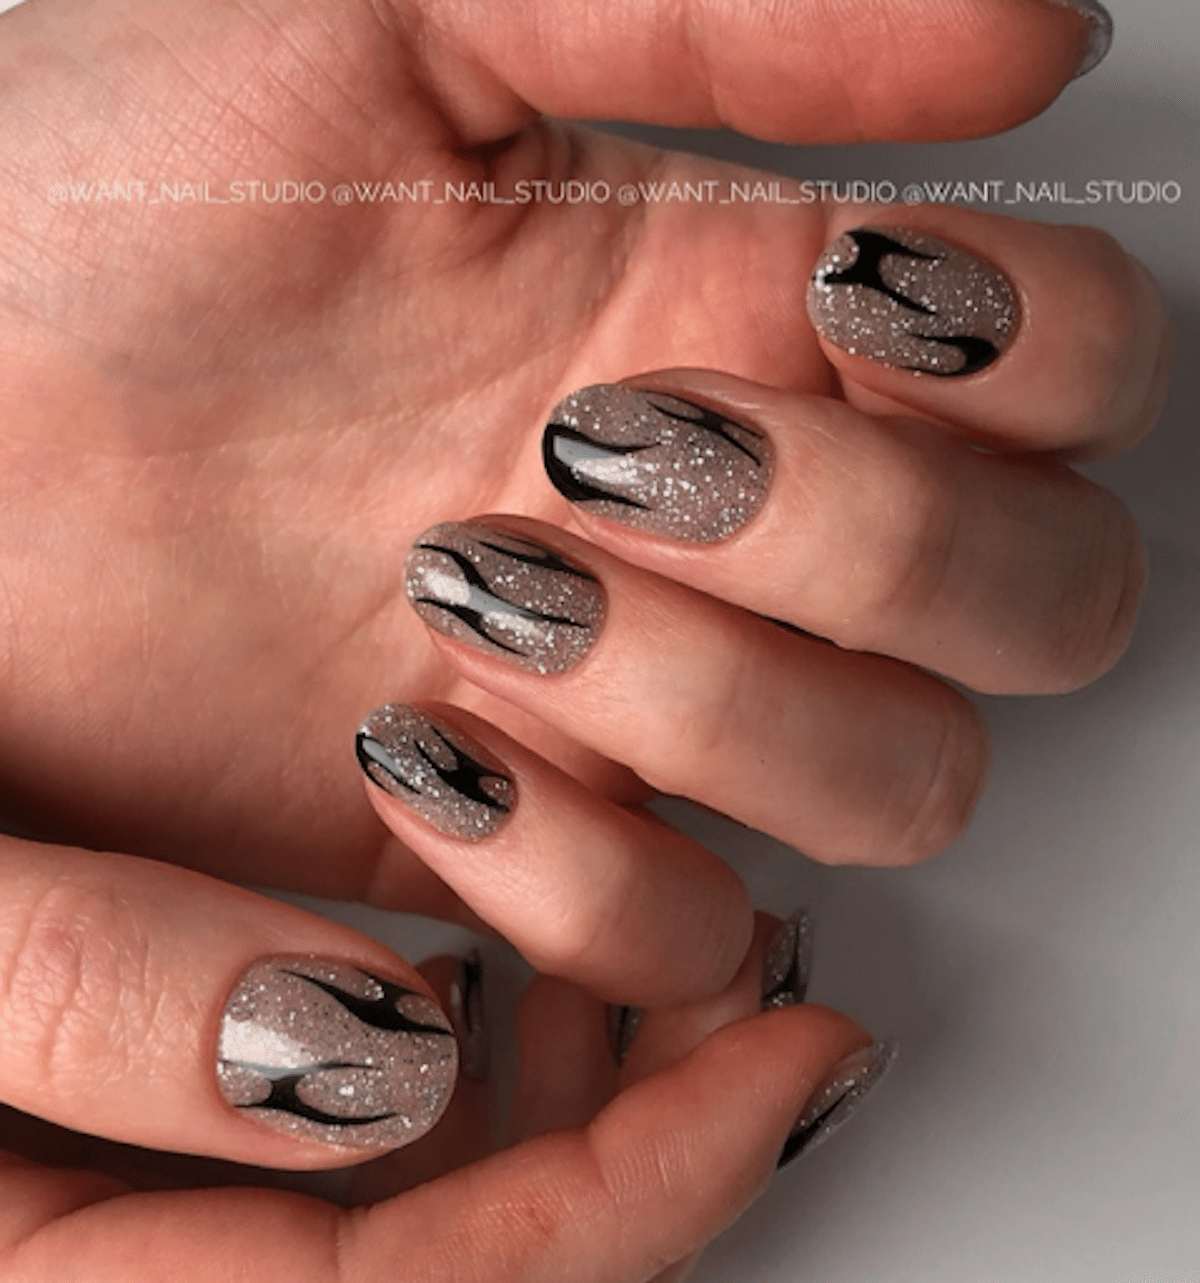 Acrylic Nails 101: Get the Basic